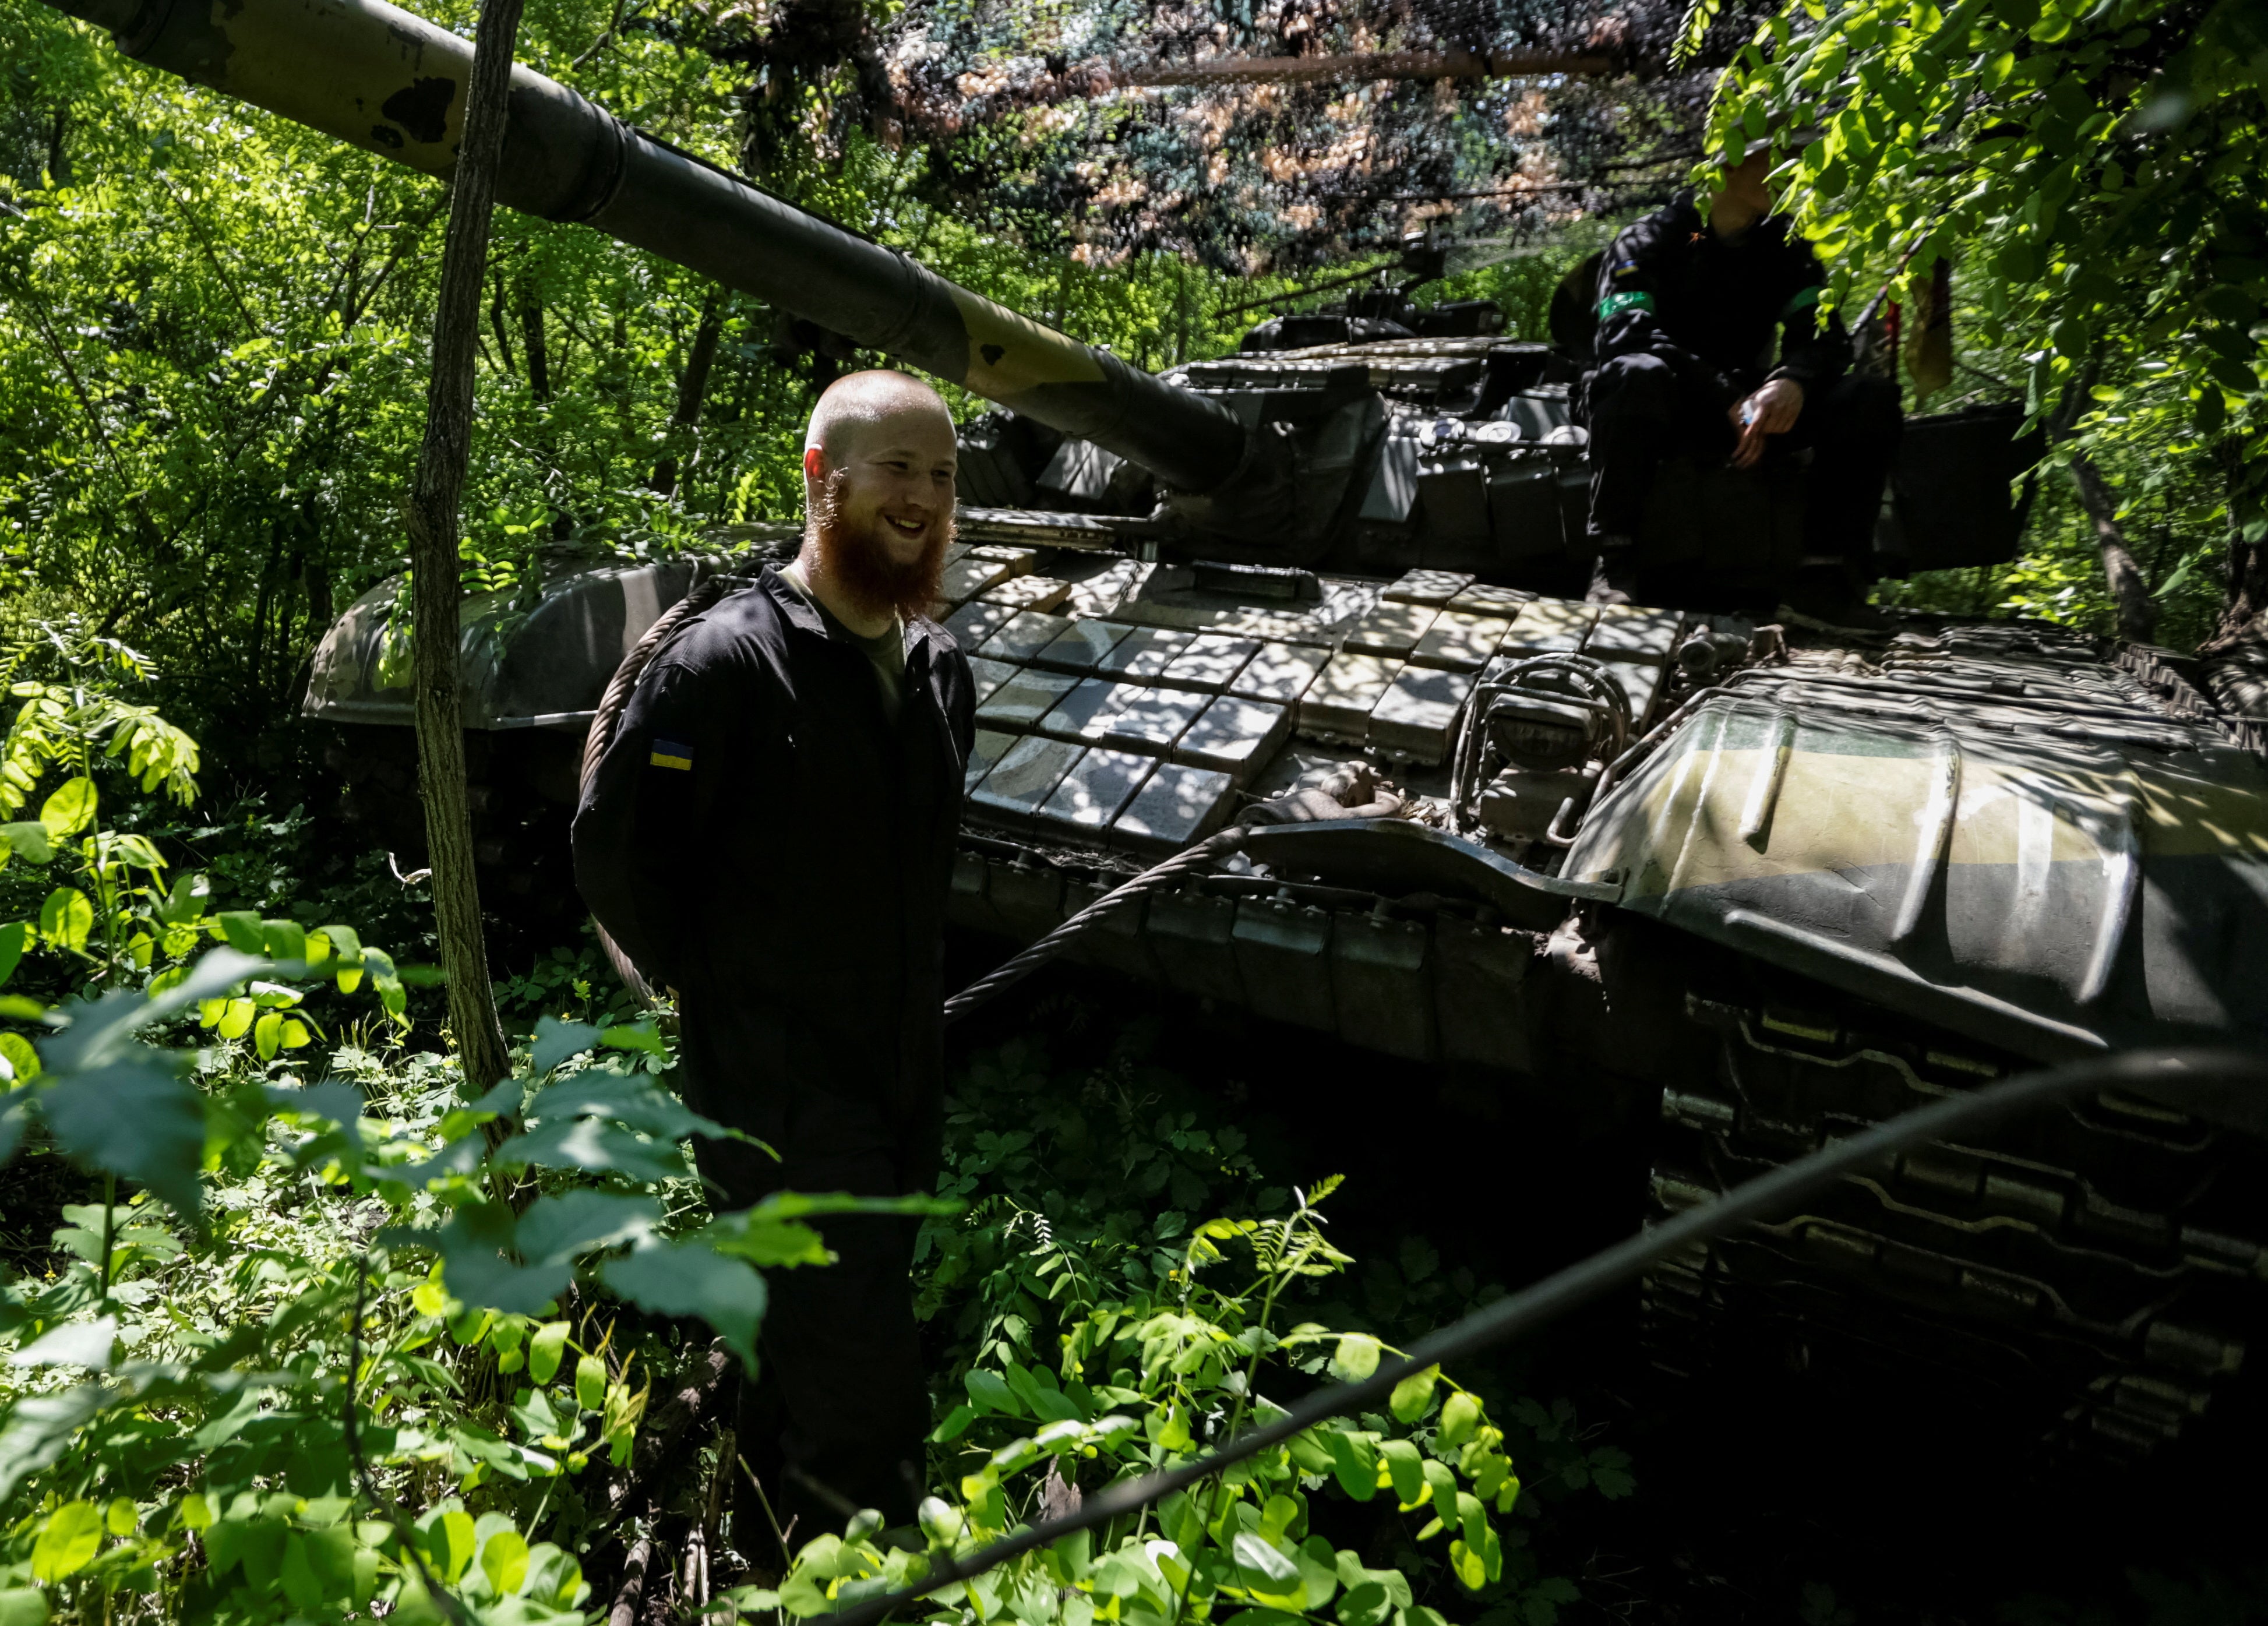 Ukrainian soldiers prepare for battle on Sunday near Donetsk